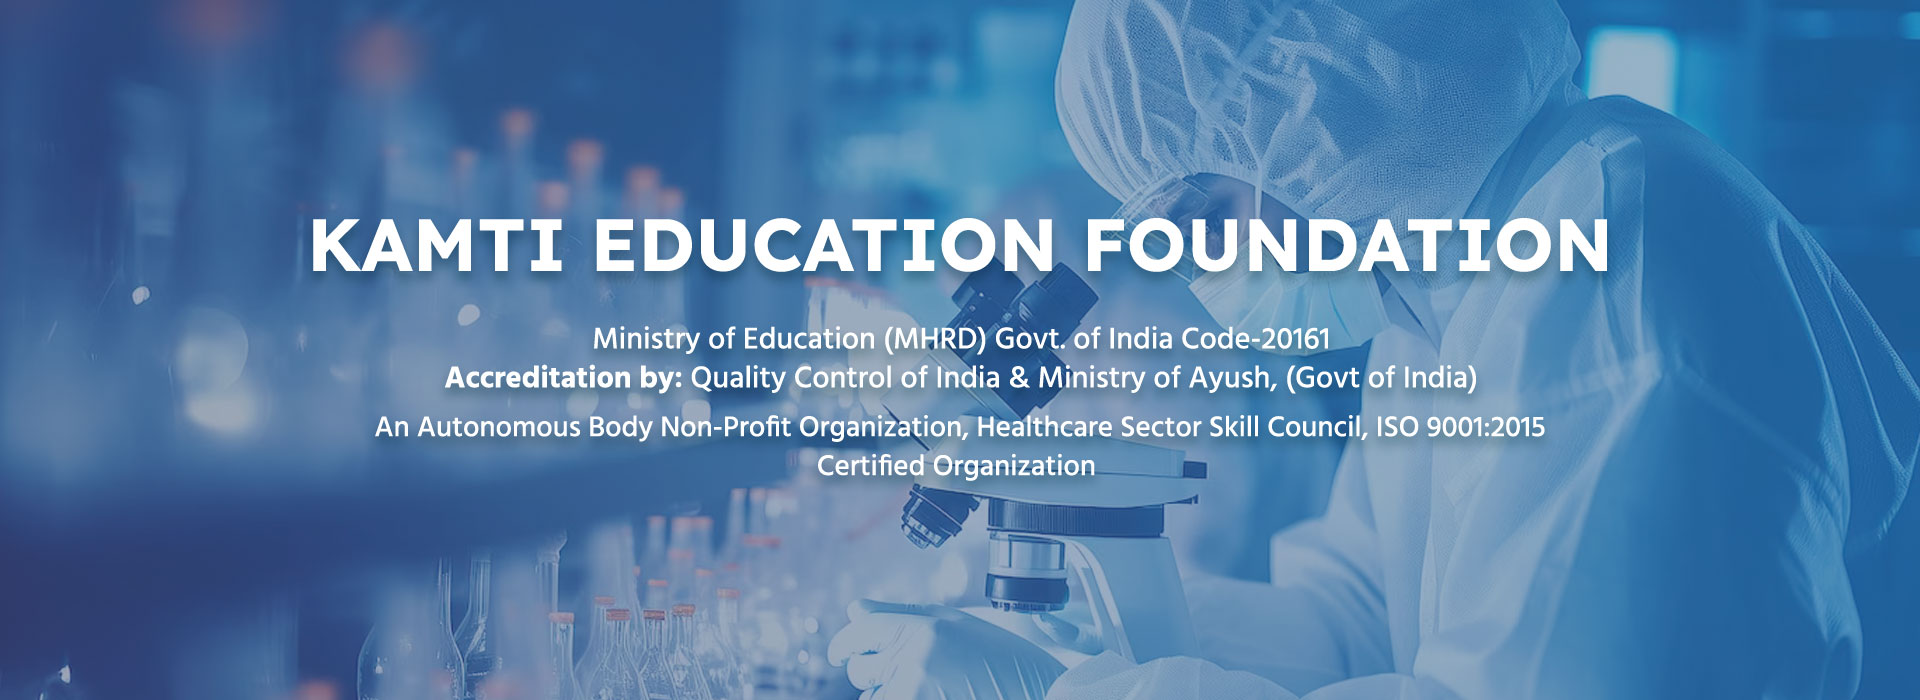 Kamti Education Foundation